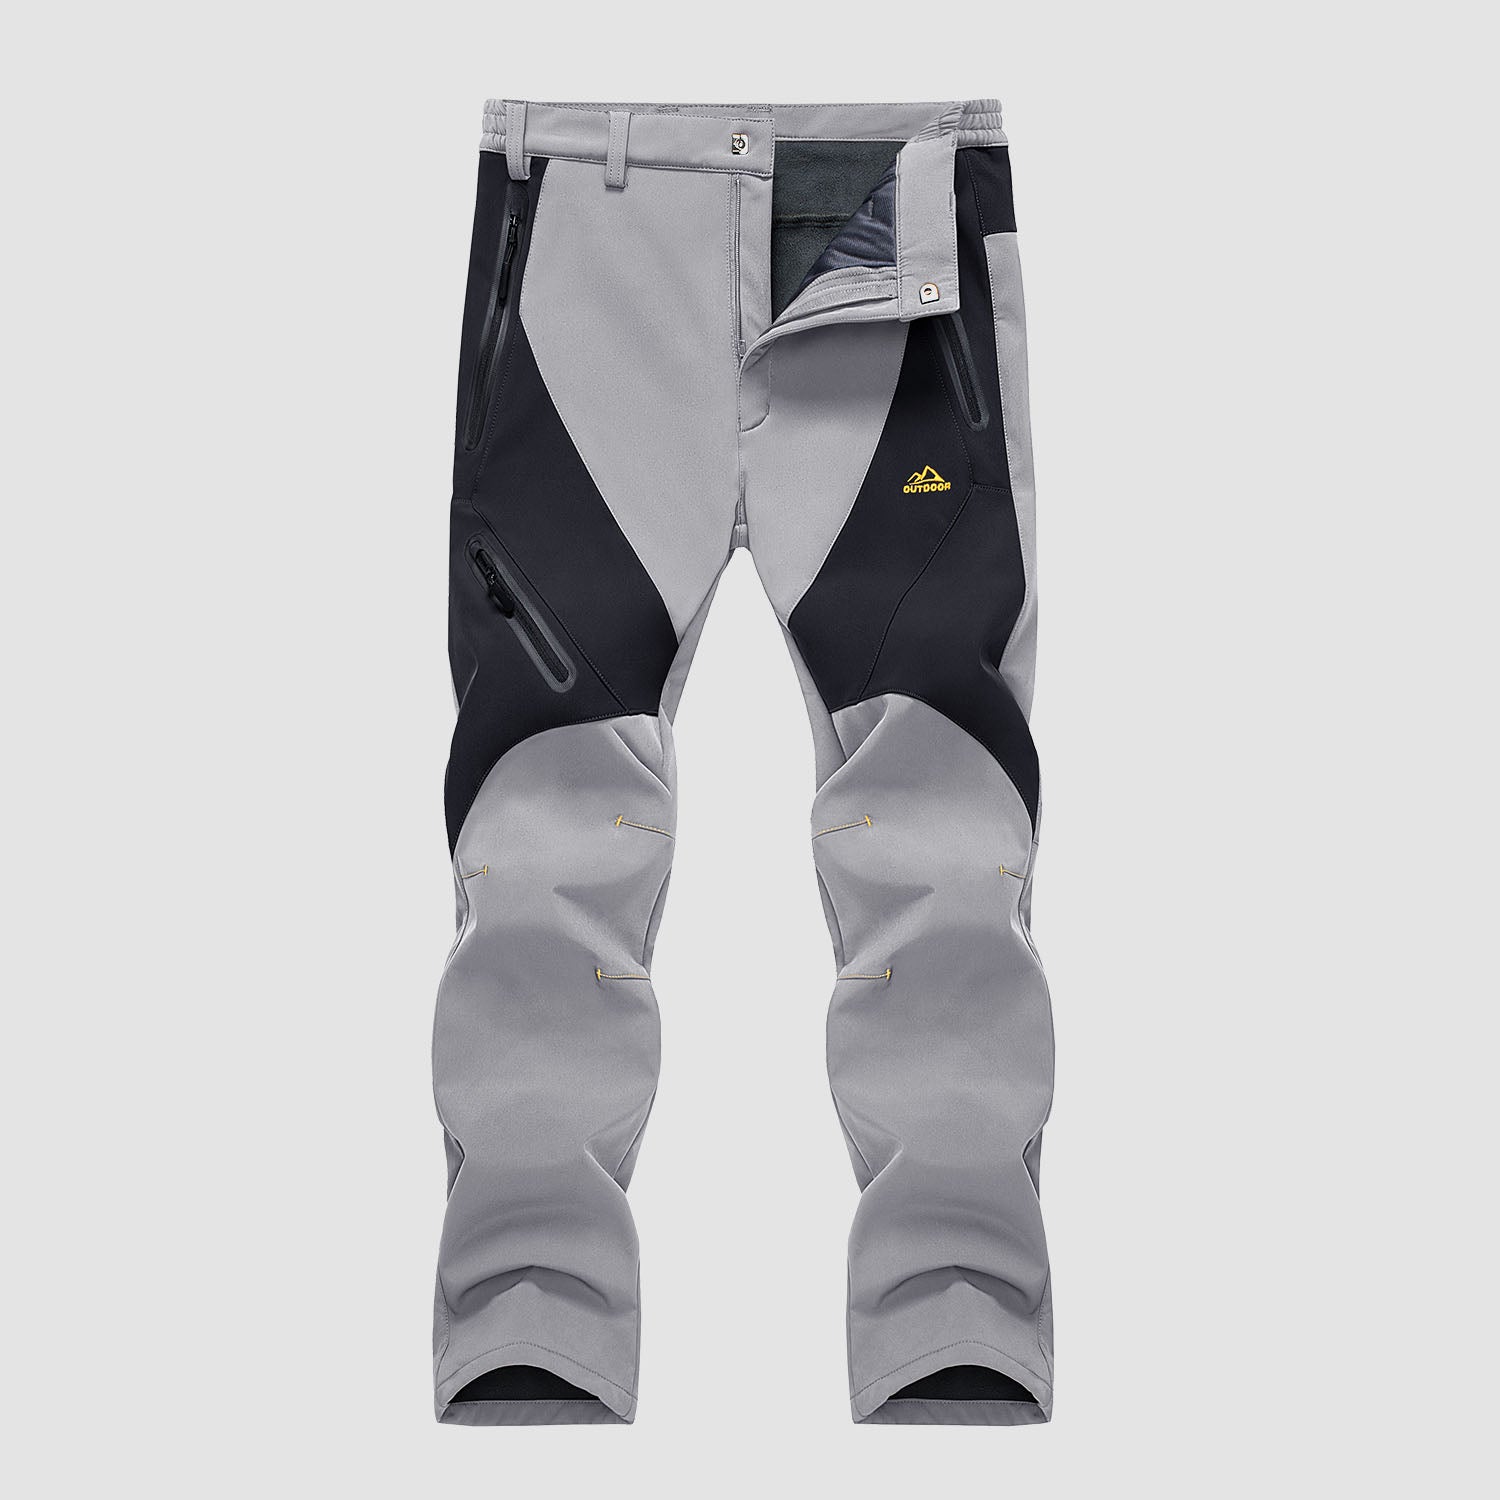 Men's Fleece Lined Outdoor Cargo Pants Casual Work Ski Hiking Pants wi –  TRGPSG